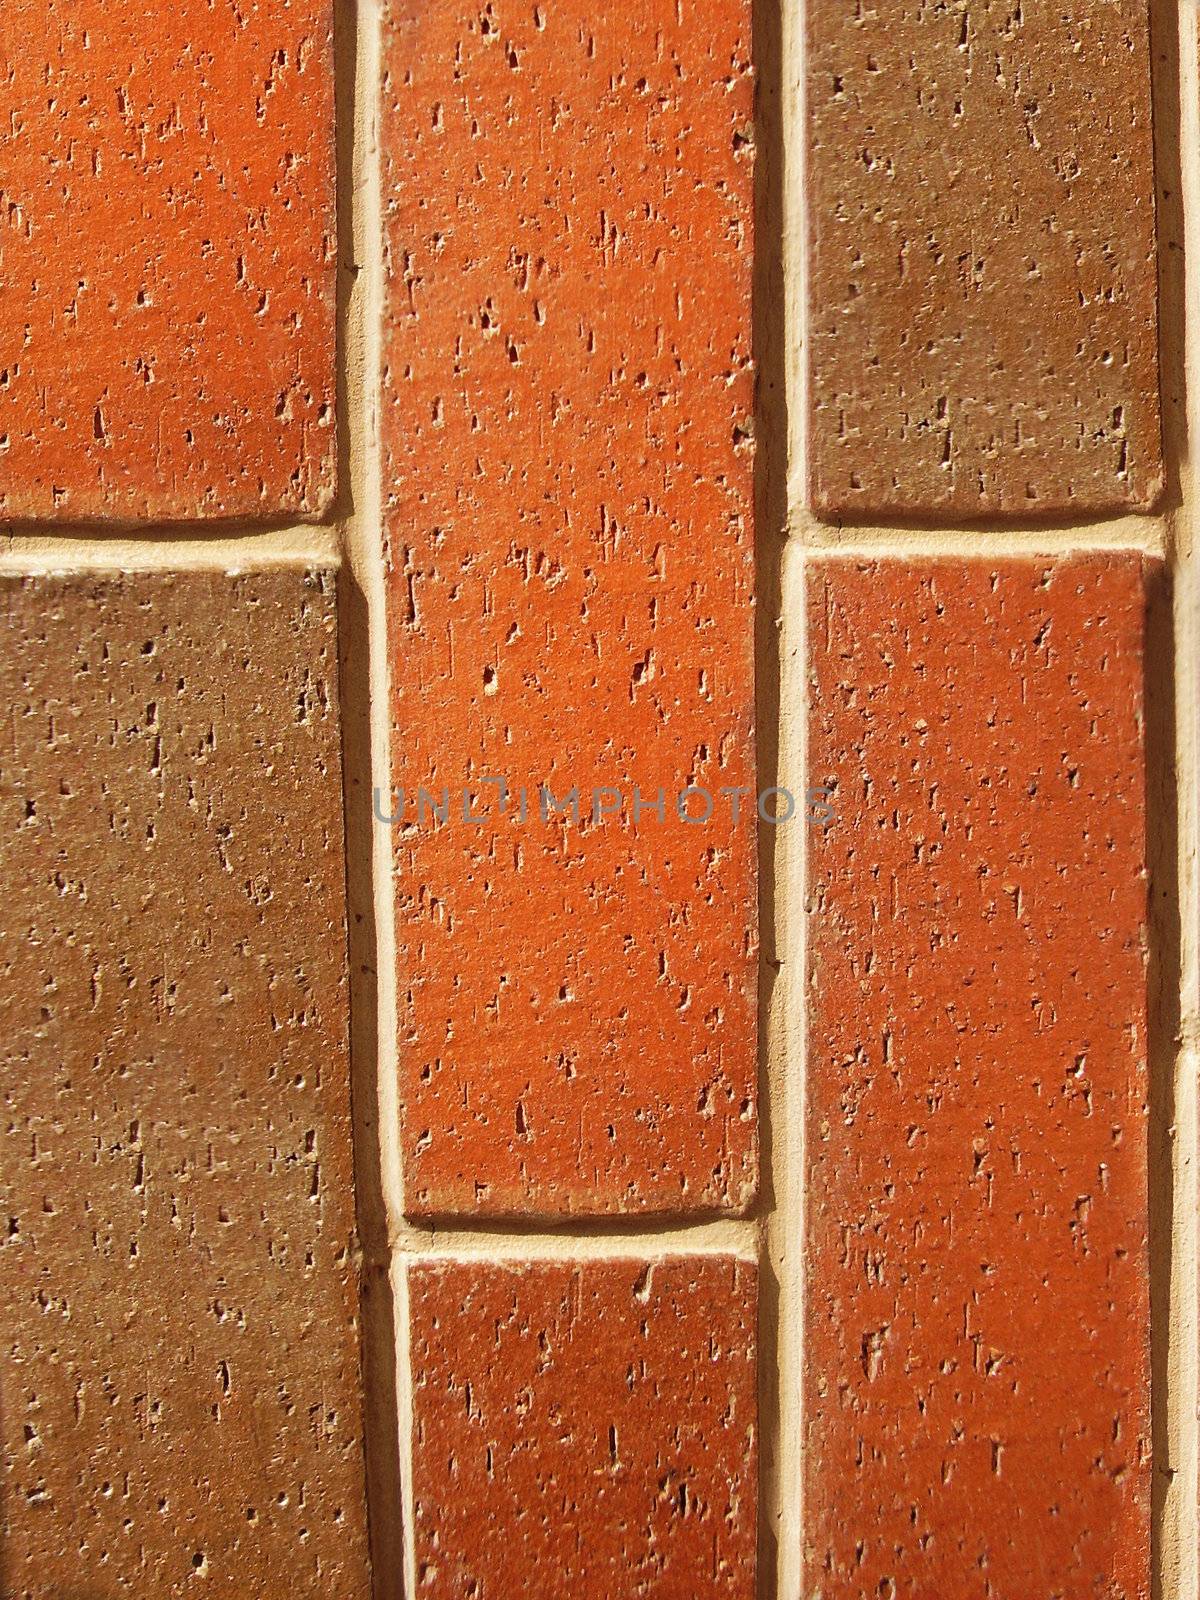 Brick wall background
       